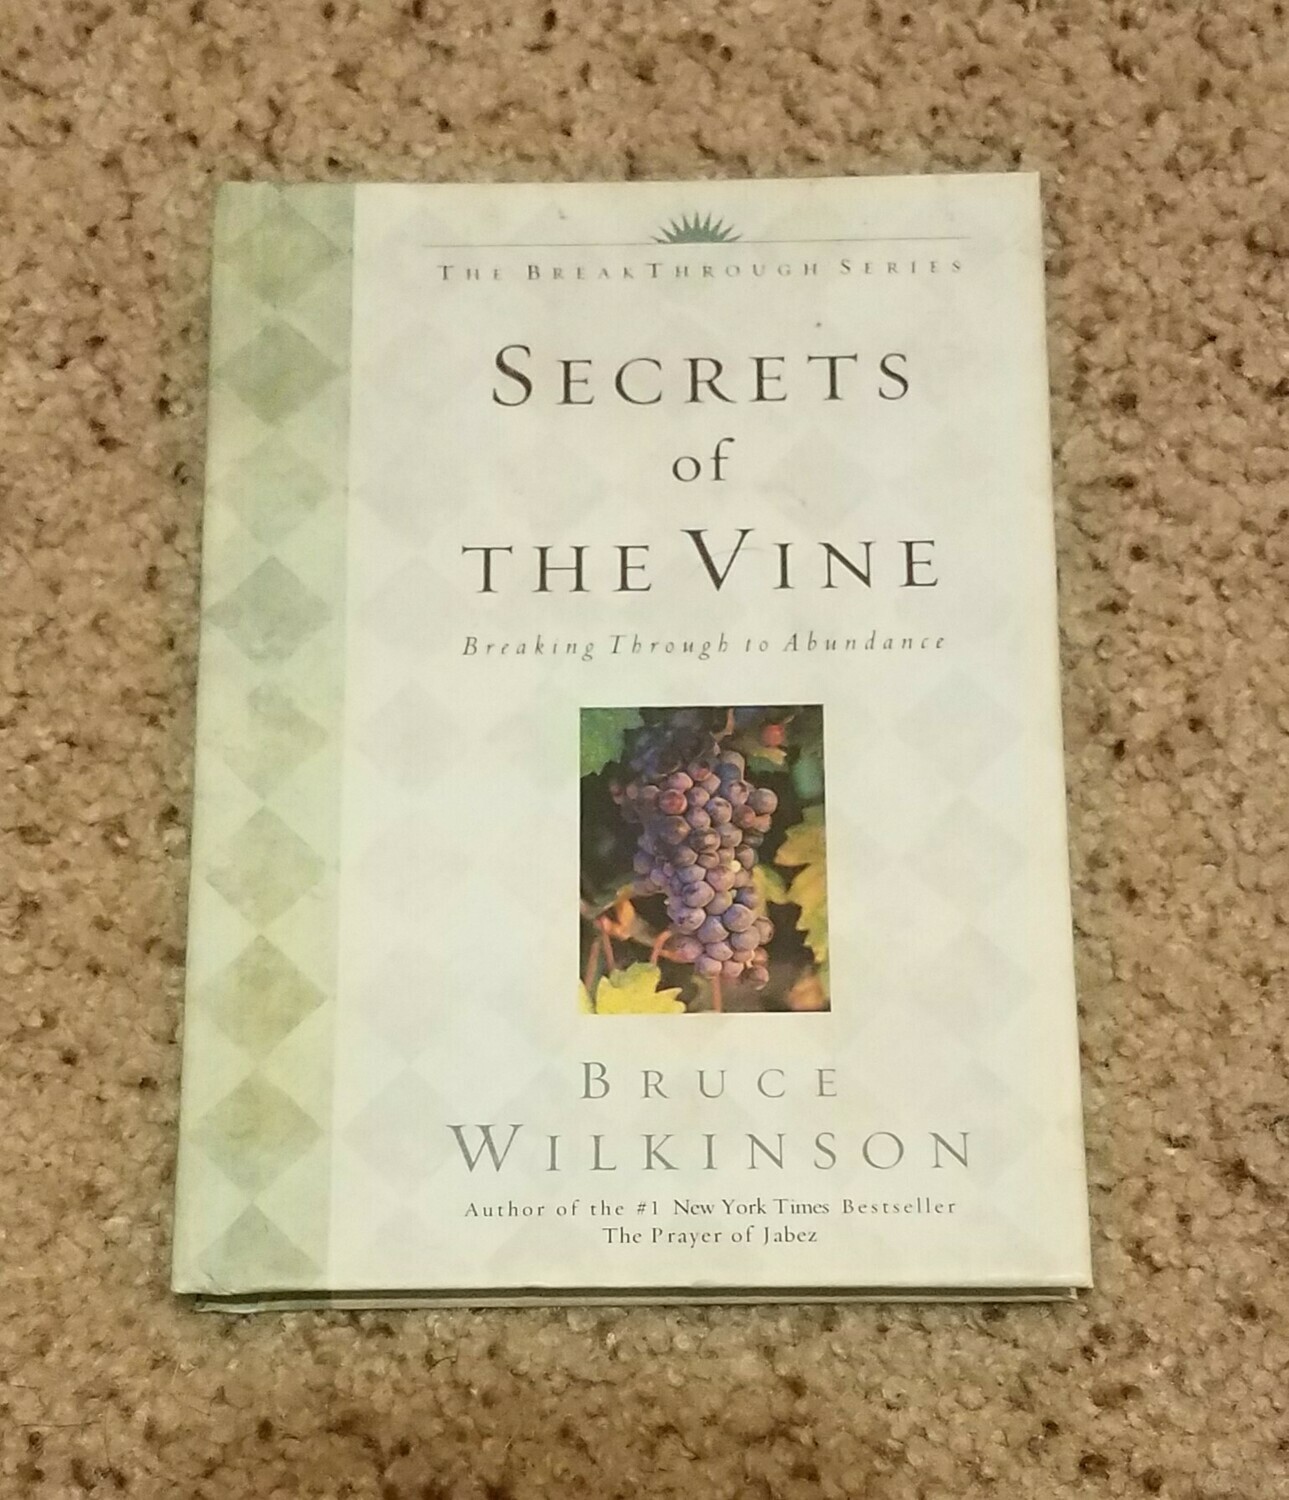 Secrets of the Vine by Bruce Wilkinson